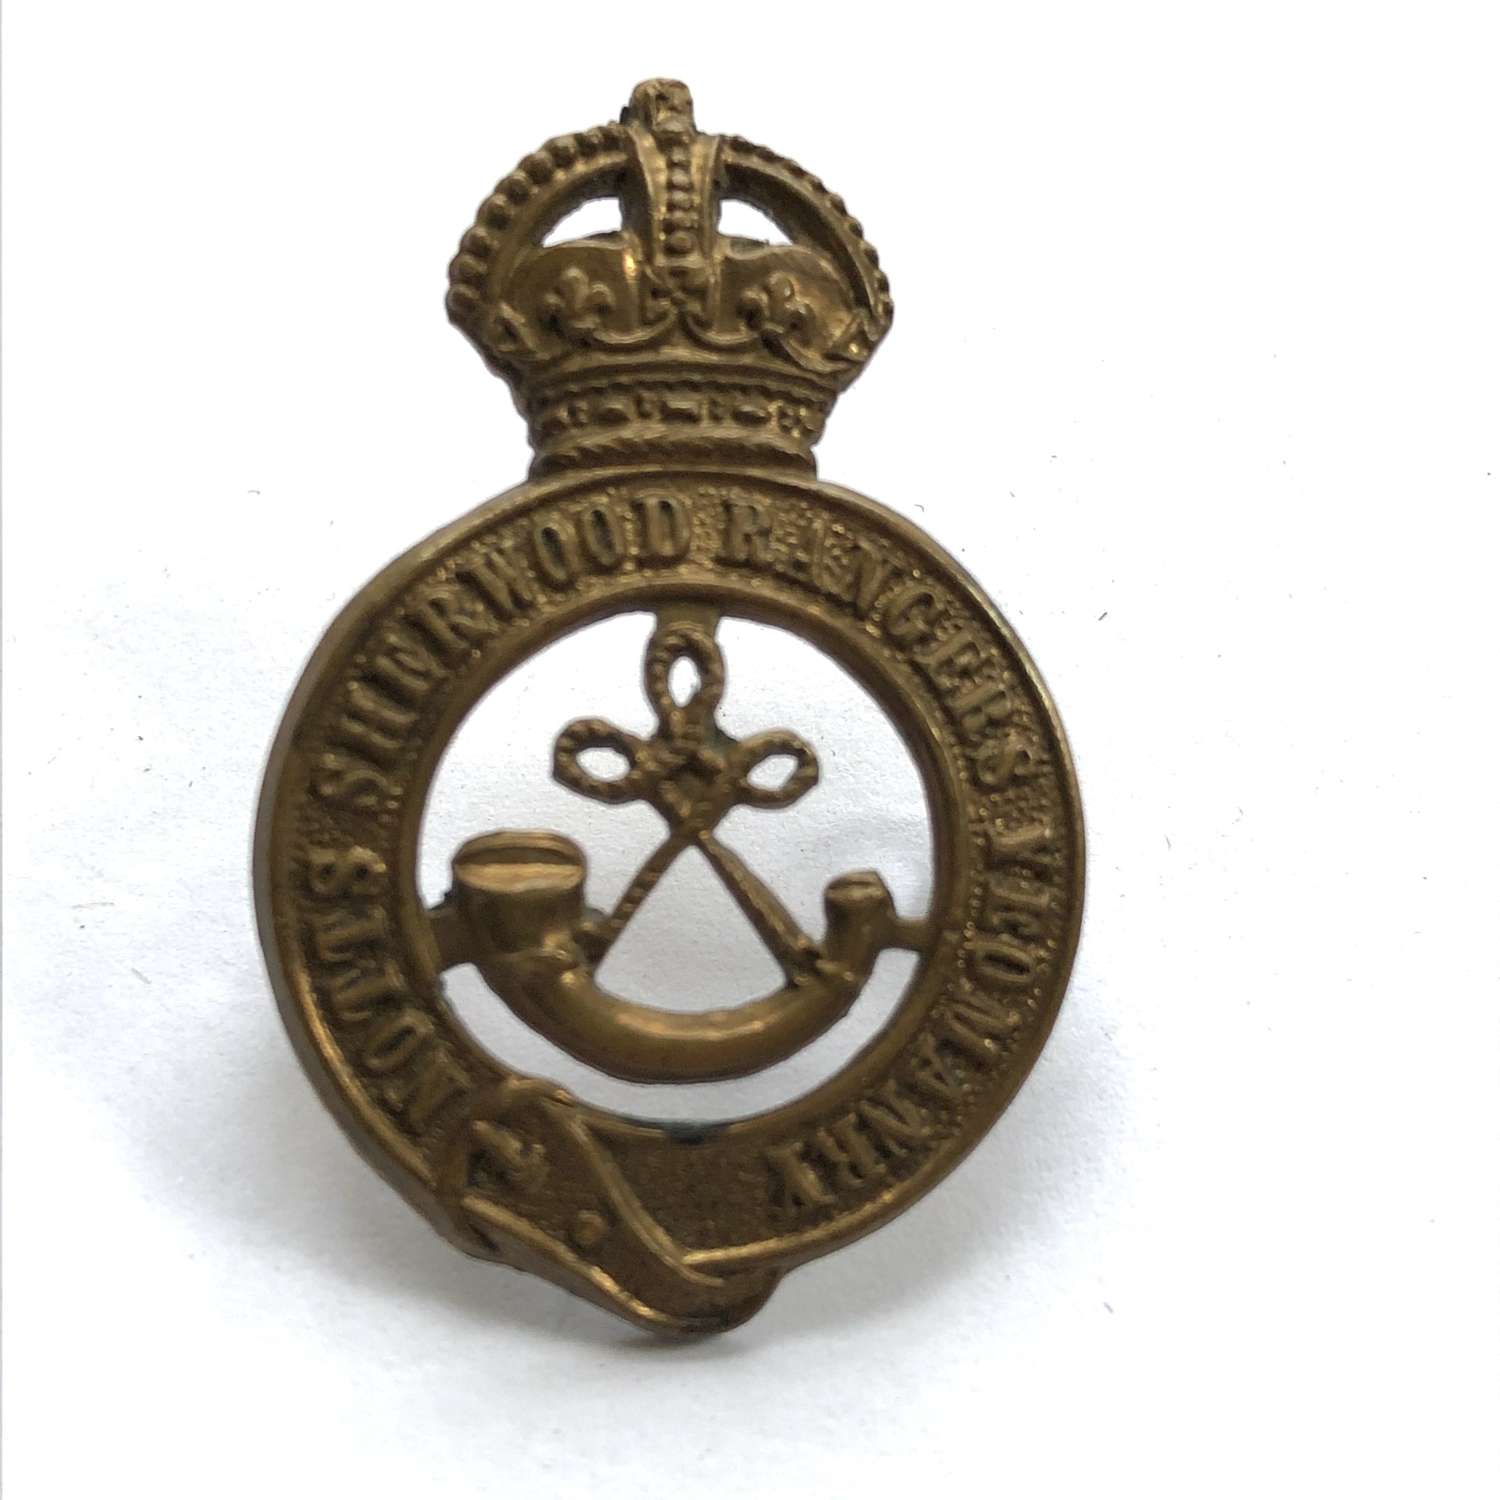 Notts Sherwood Rangers Yeomanry cap badge circa 1936-52